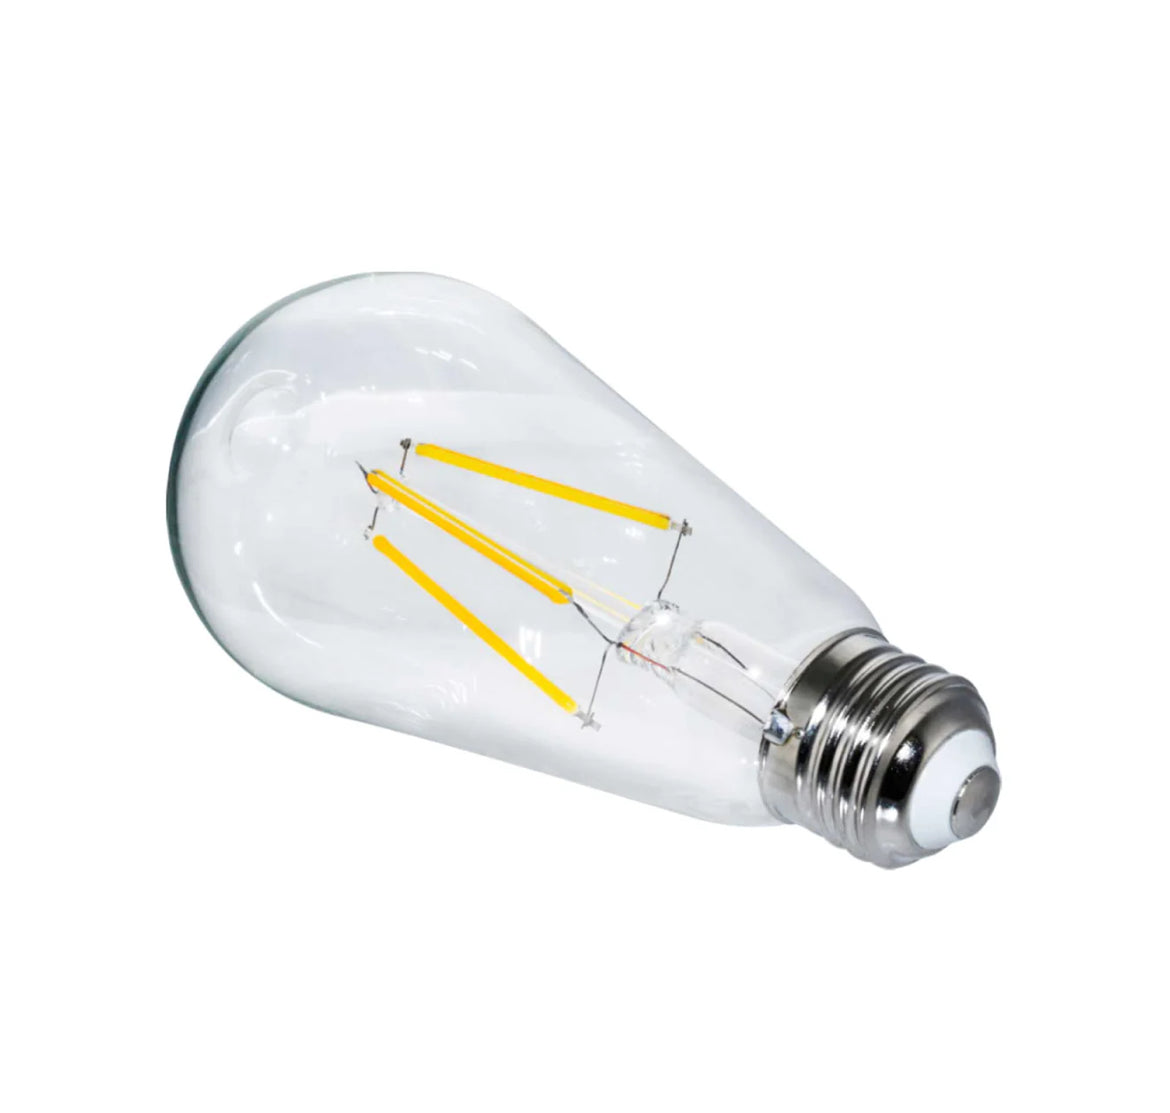 Phos Light  75-Watt Equivalent ST19 E26 Filament LED Light Bulbs 